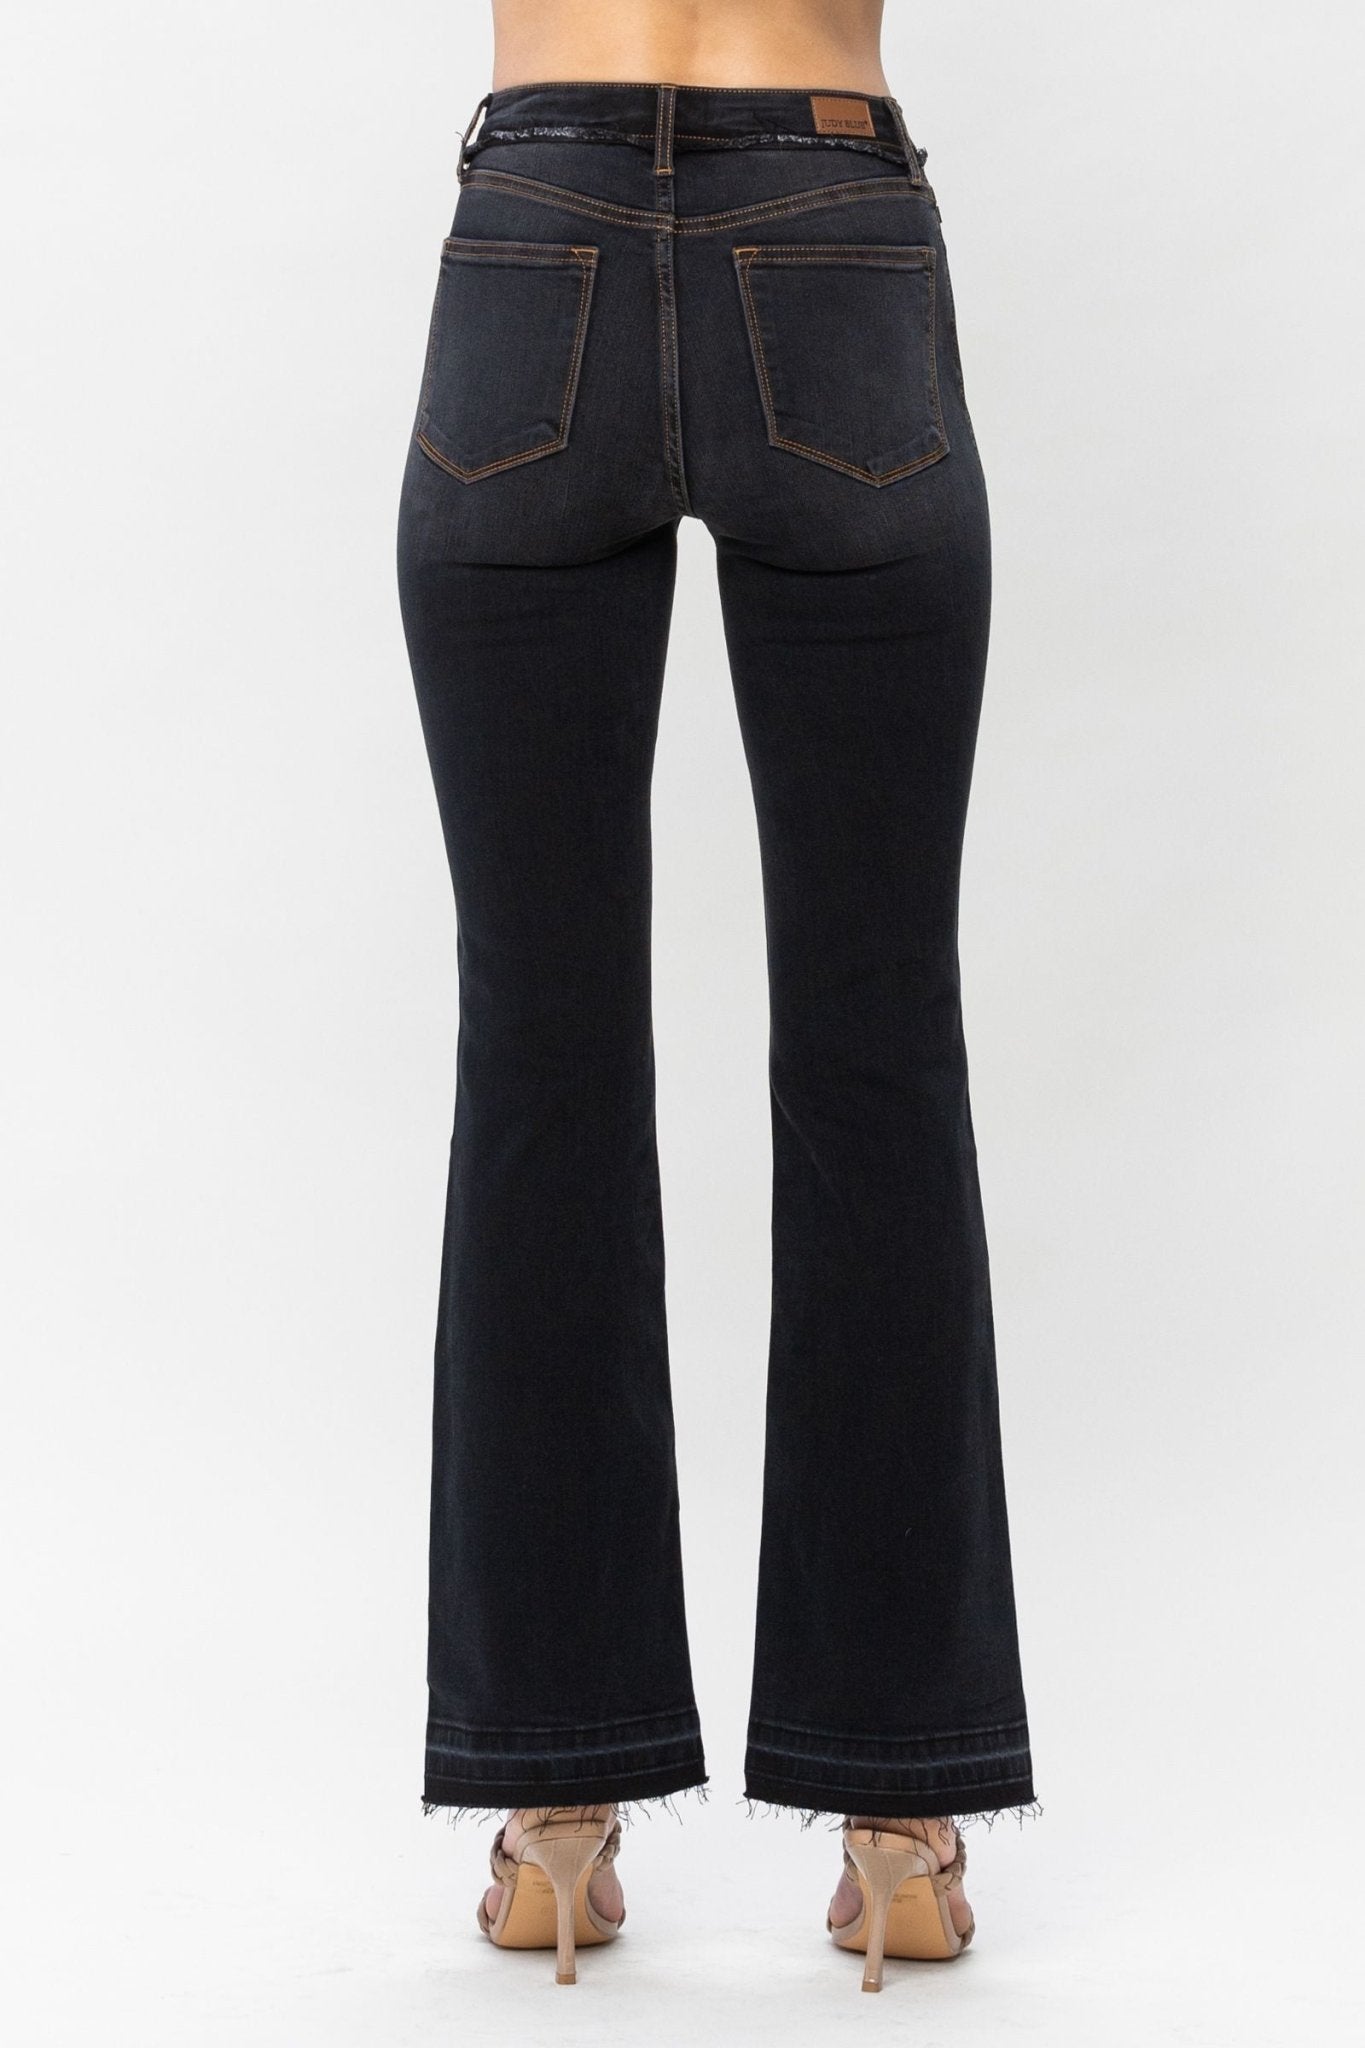 La-la Edgy Black Slim Bootcut Jeans | Judy Blue | 82535 - Lavender Hills BeautyJudy Blue